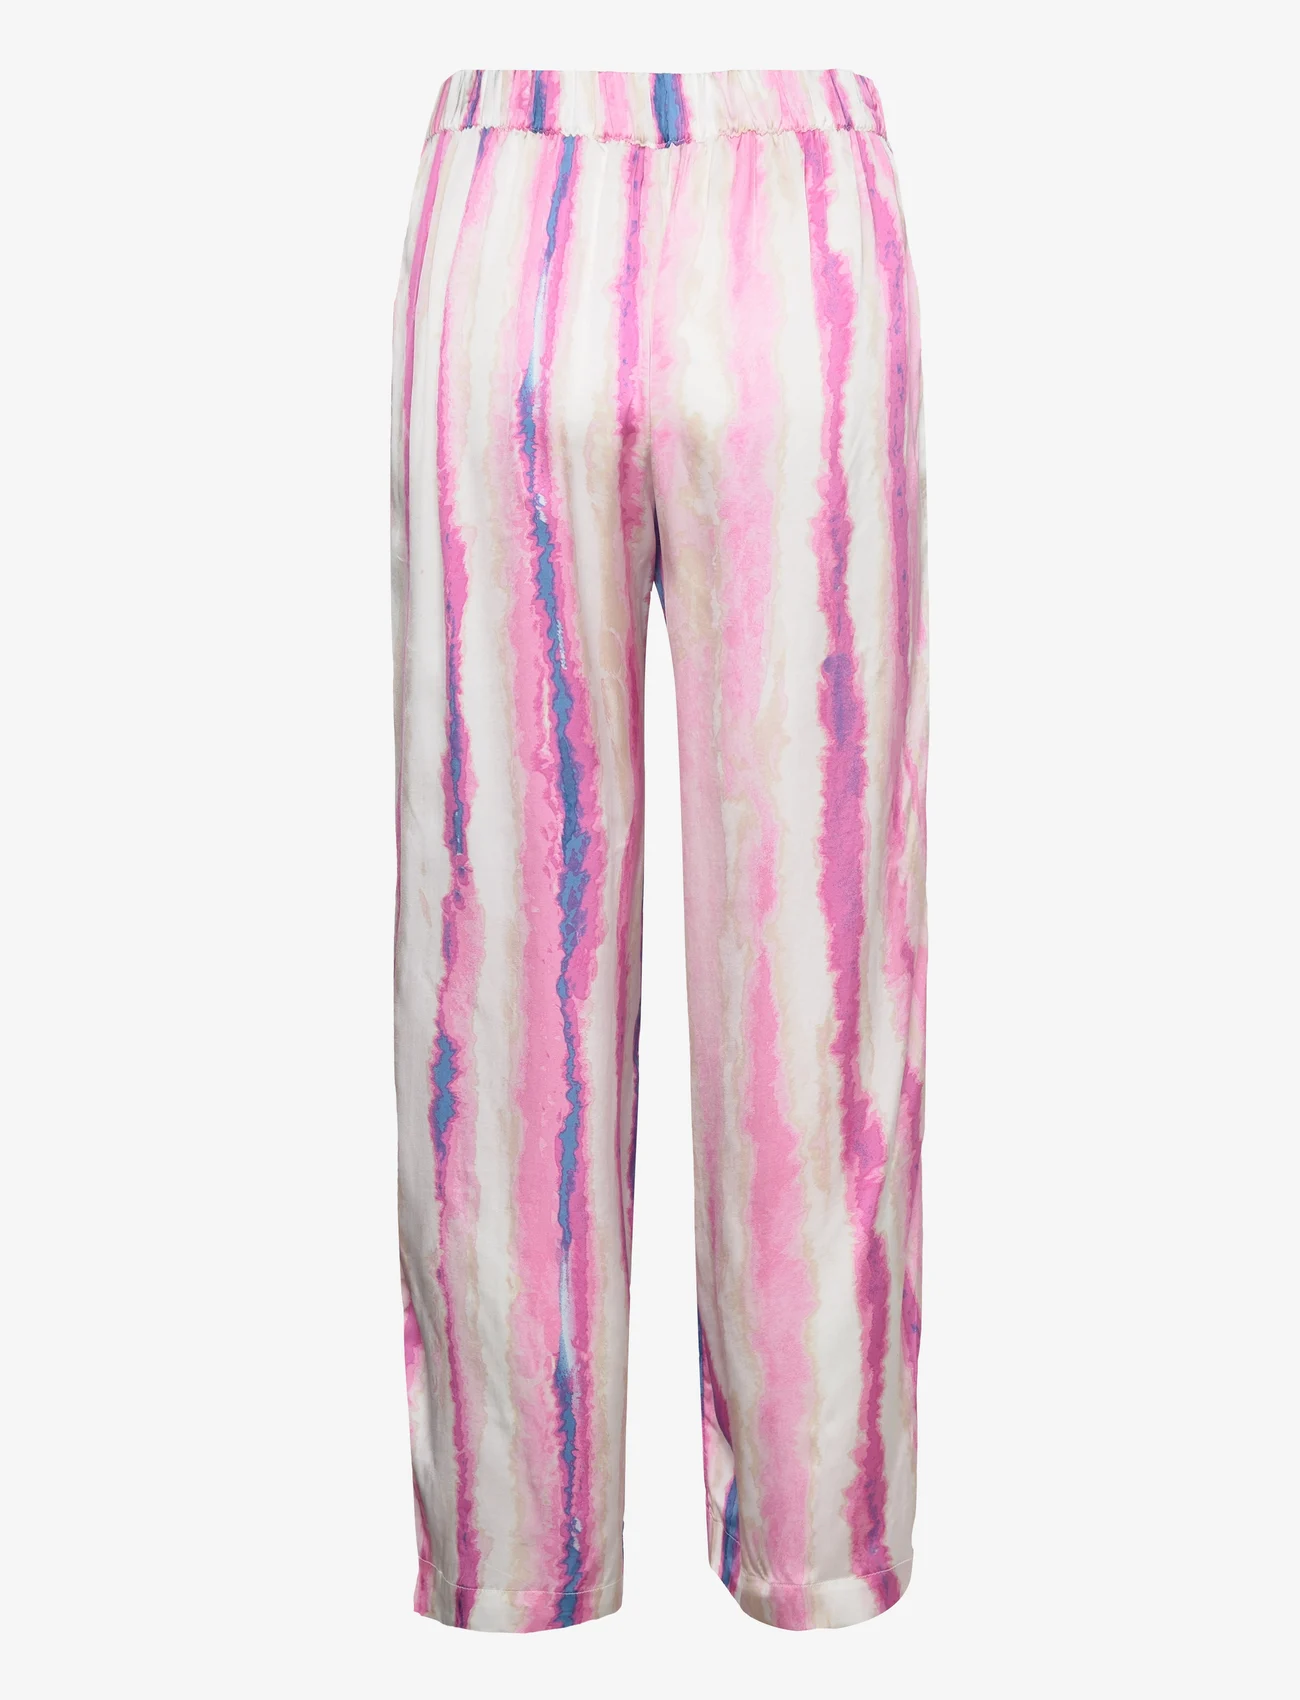 Tom Tailor - pants printed sateen culotte - culottes - pink tie dye stripe - 1